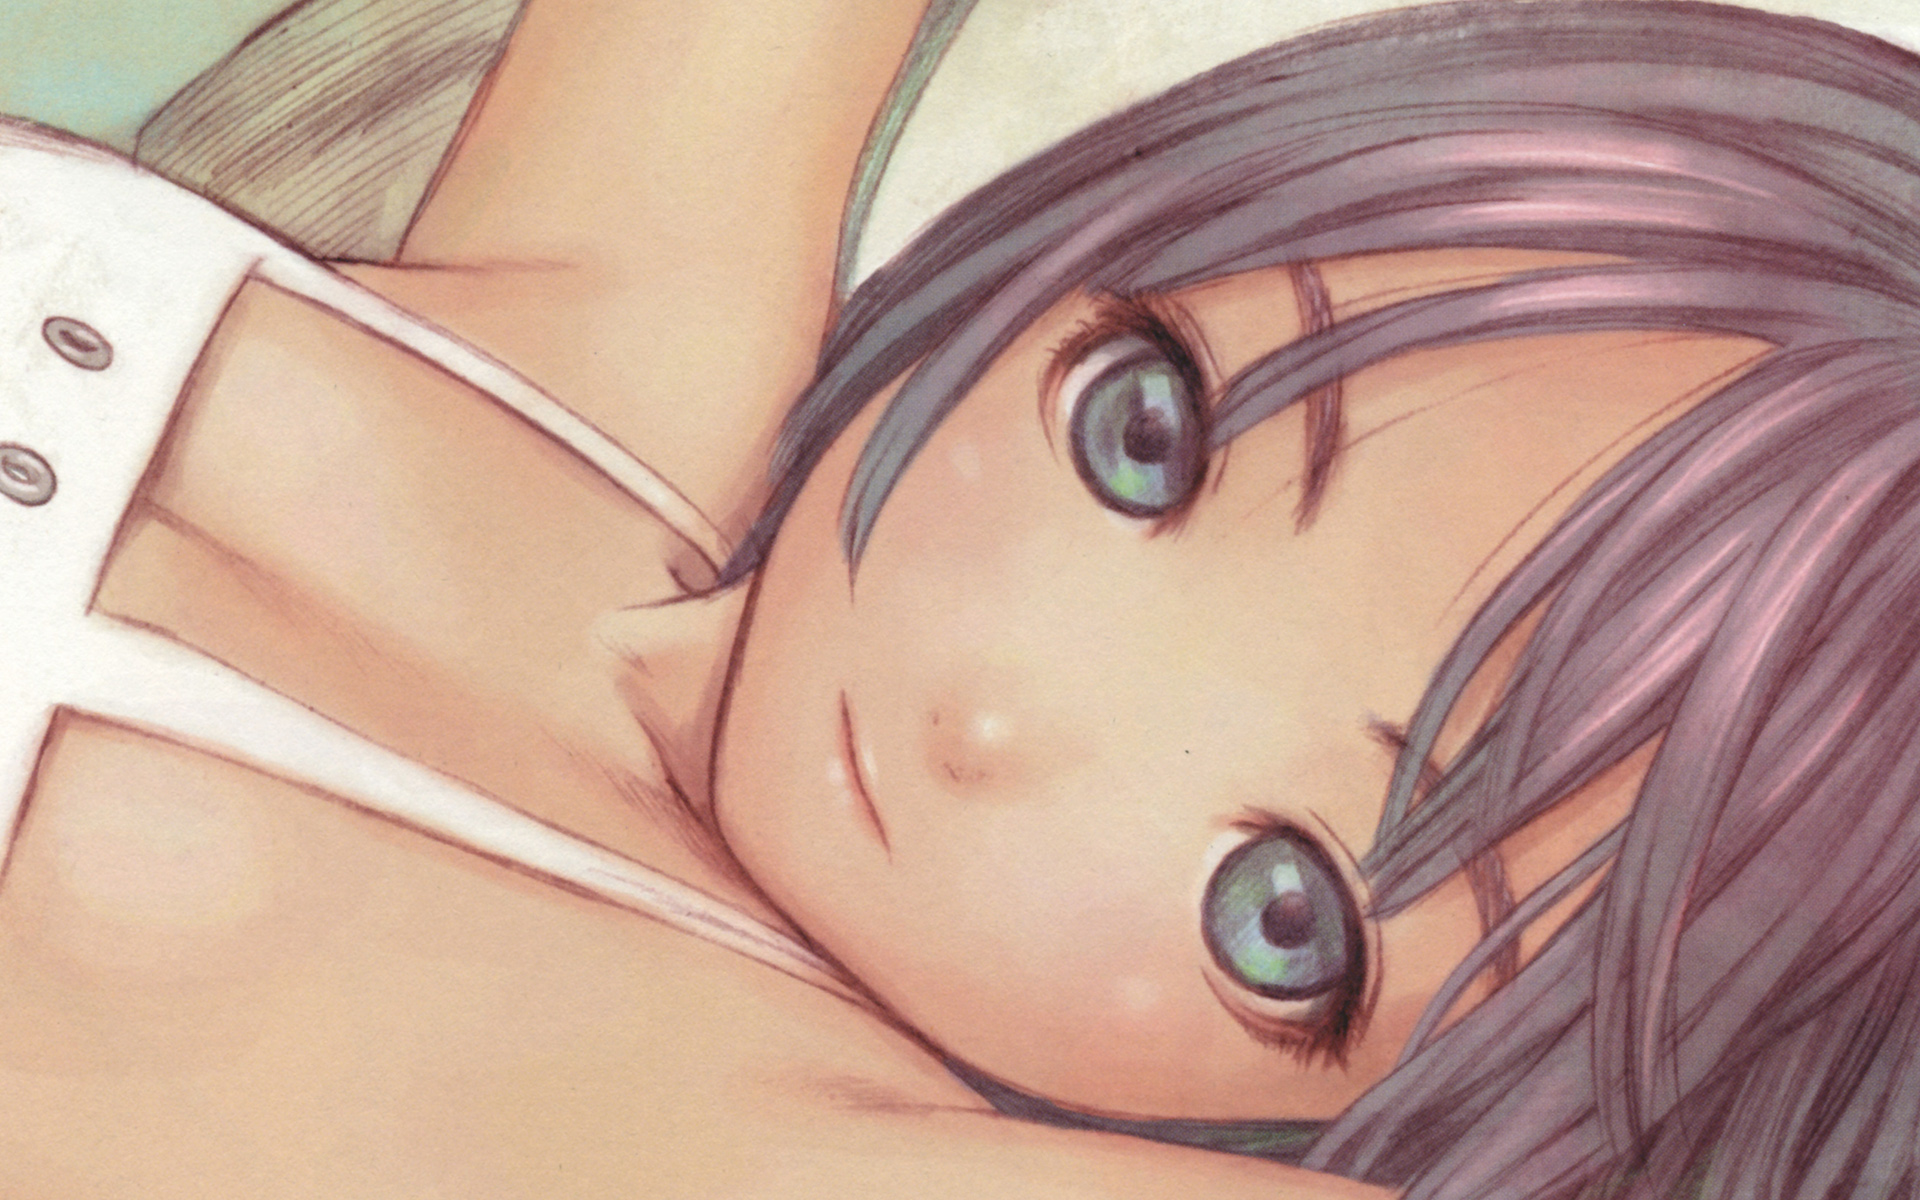 Anime Anime Girls Looking At Viewer Artwork Digital Art 2D Sketches Murata Range 1920x1200